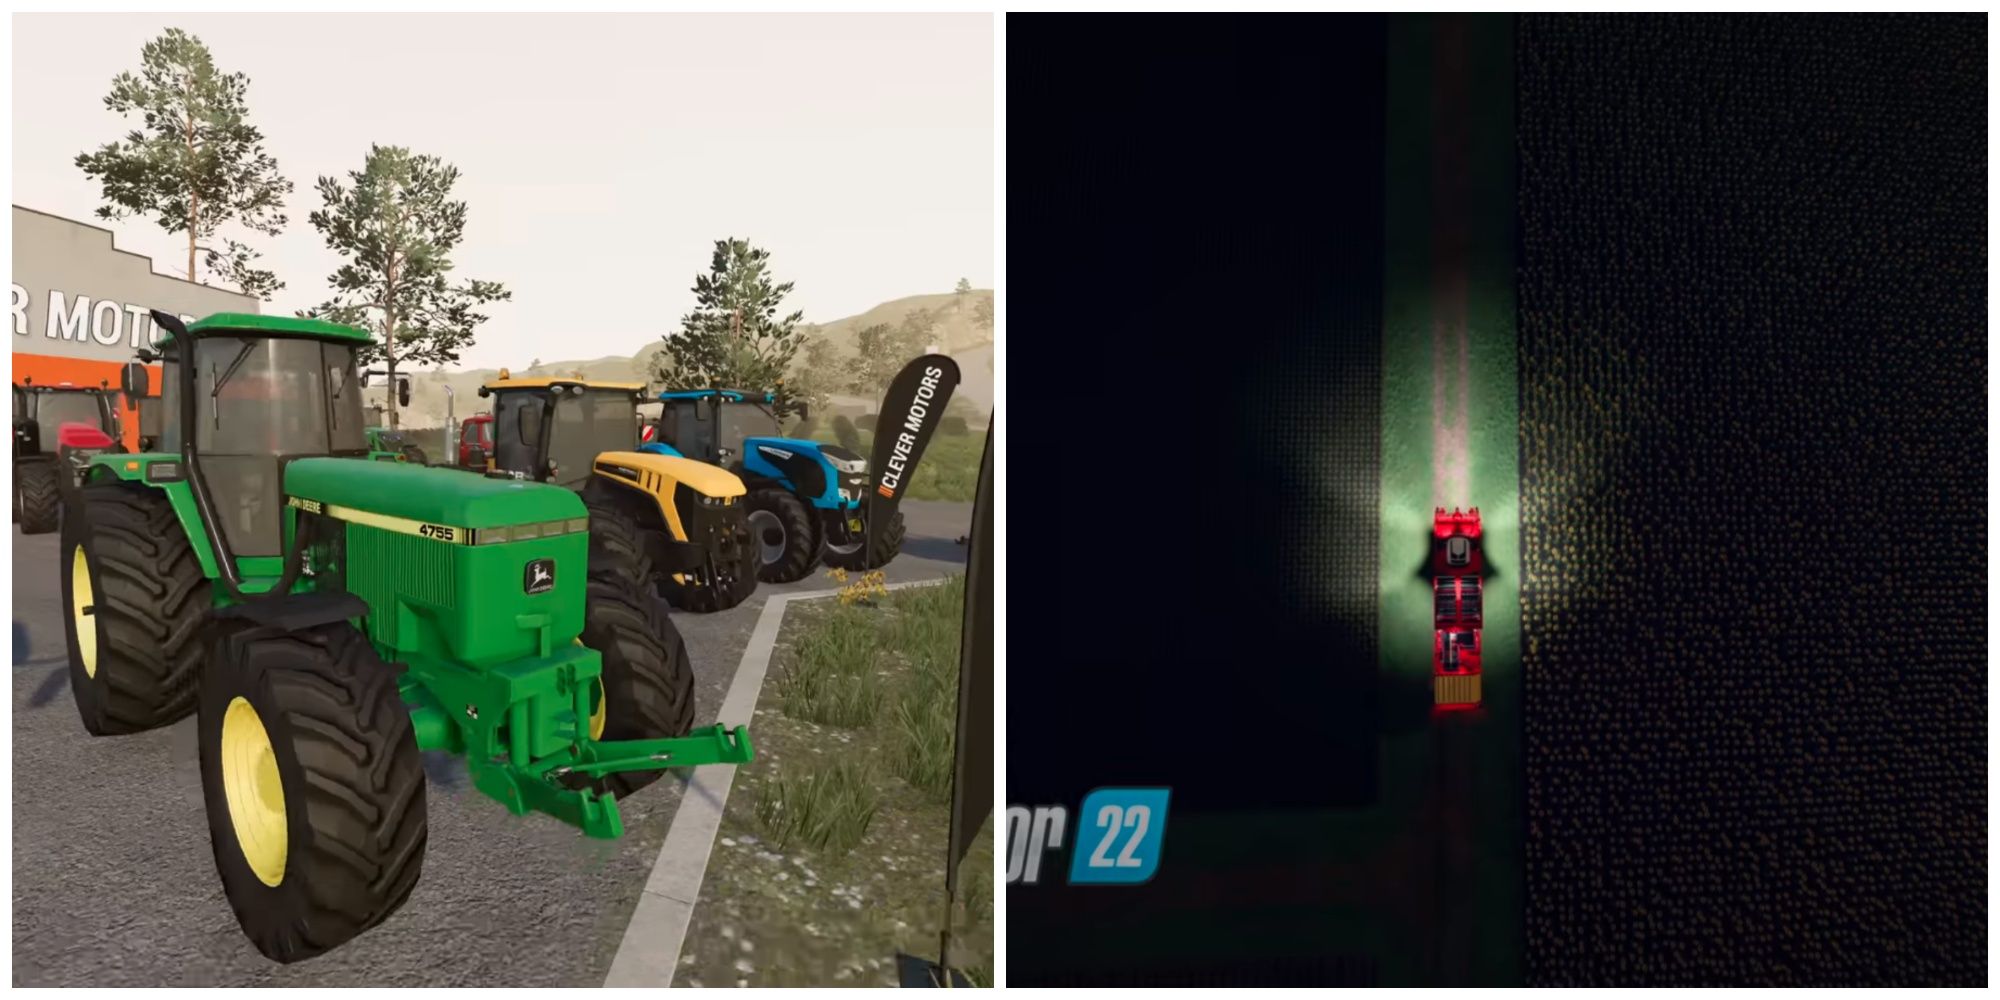 Farming Simulator 22 Vs. Farming Simulator 23: Which Game Is Better?